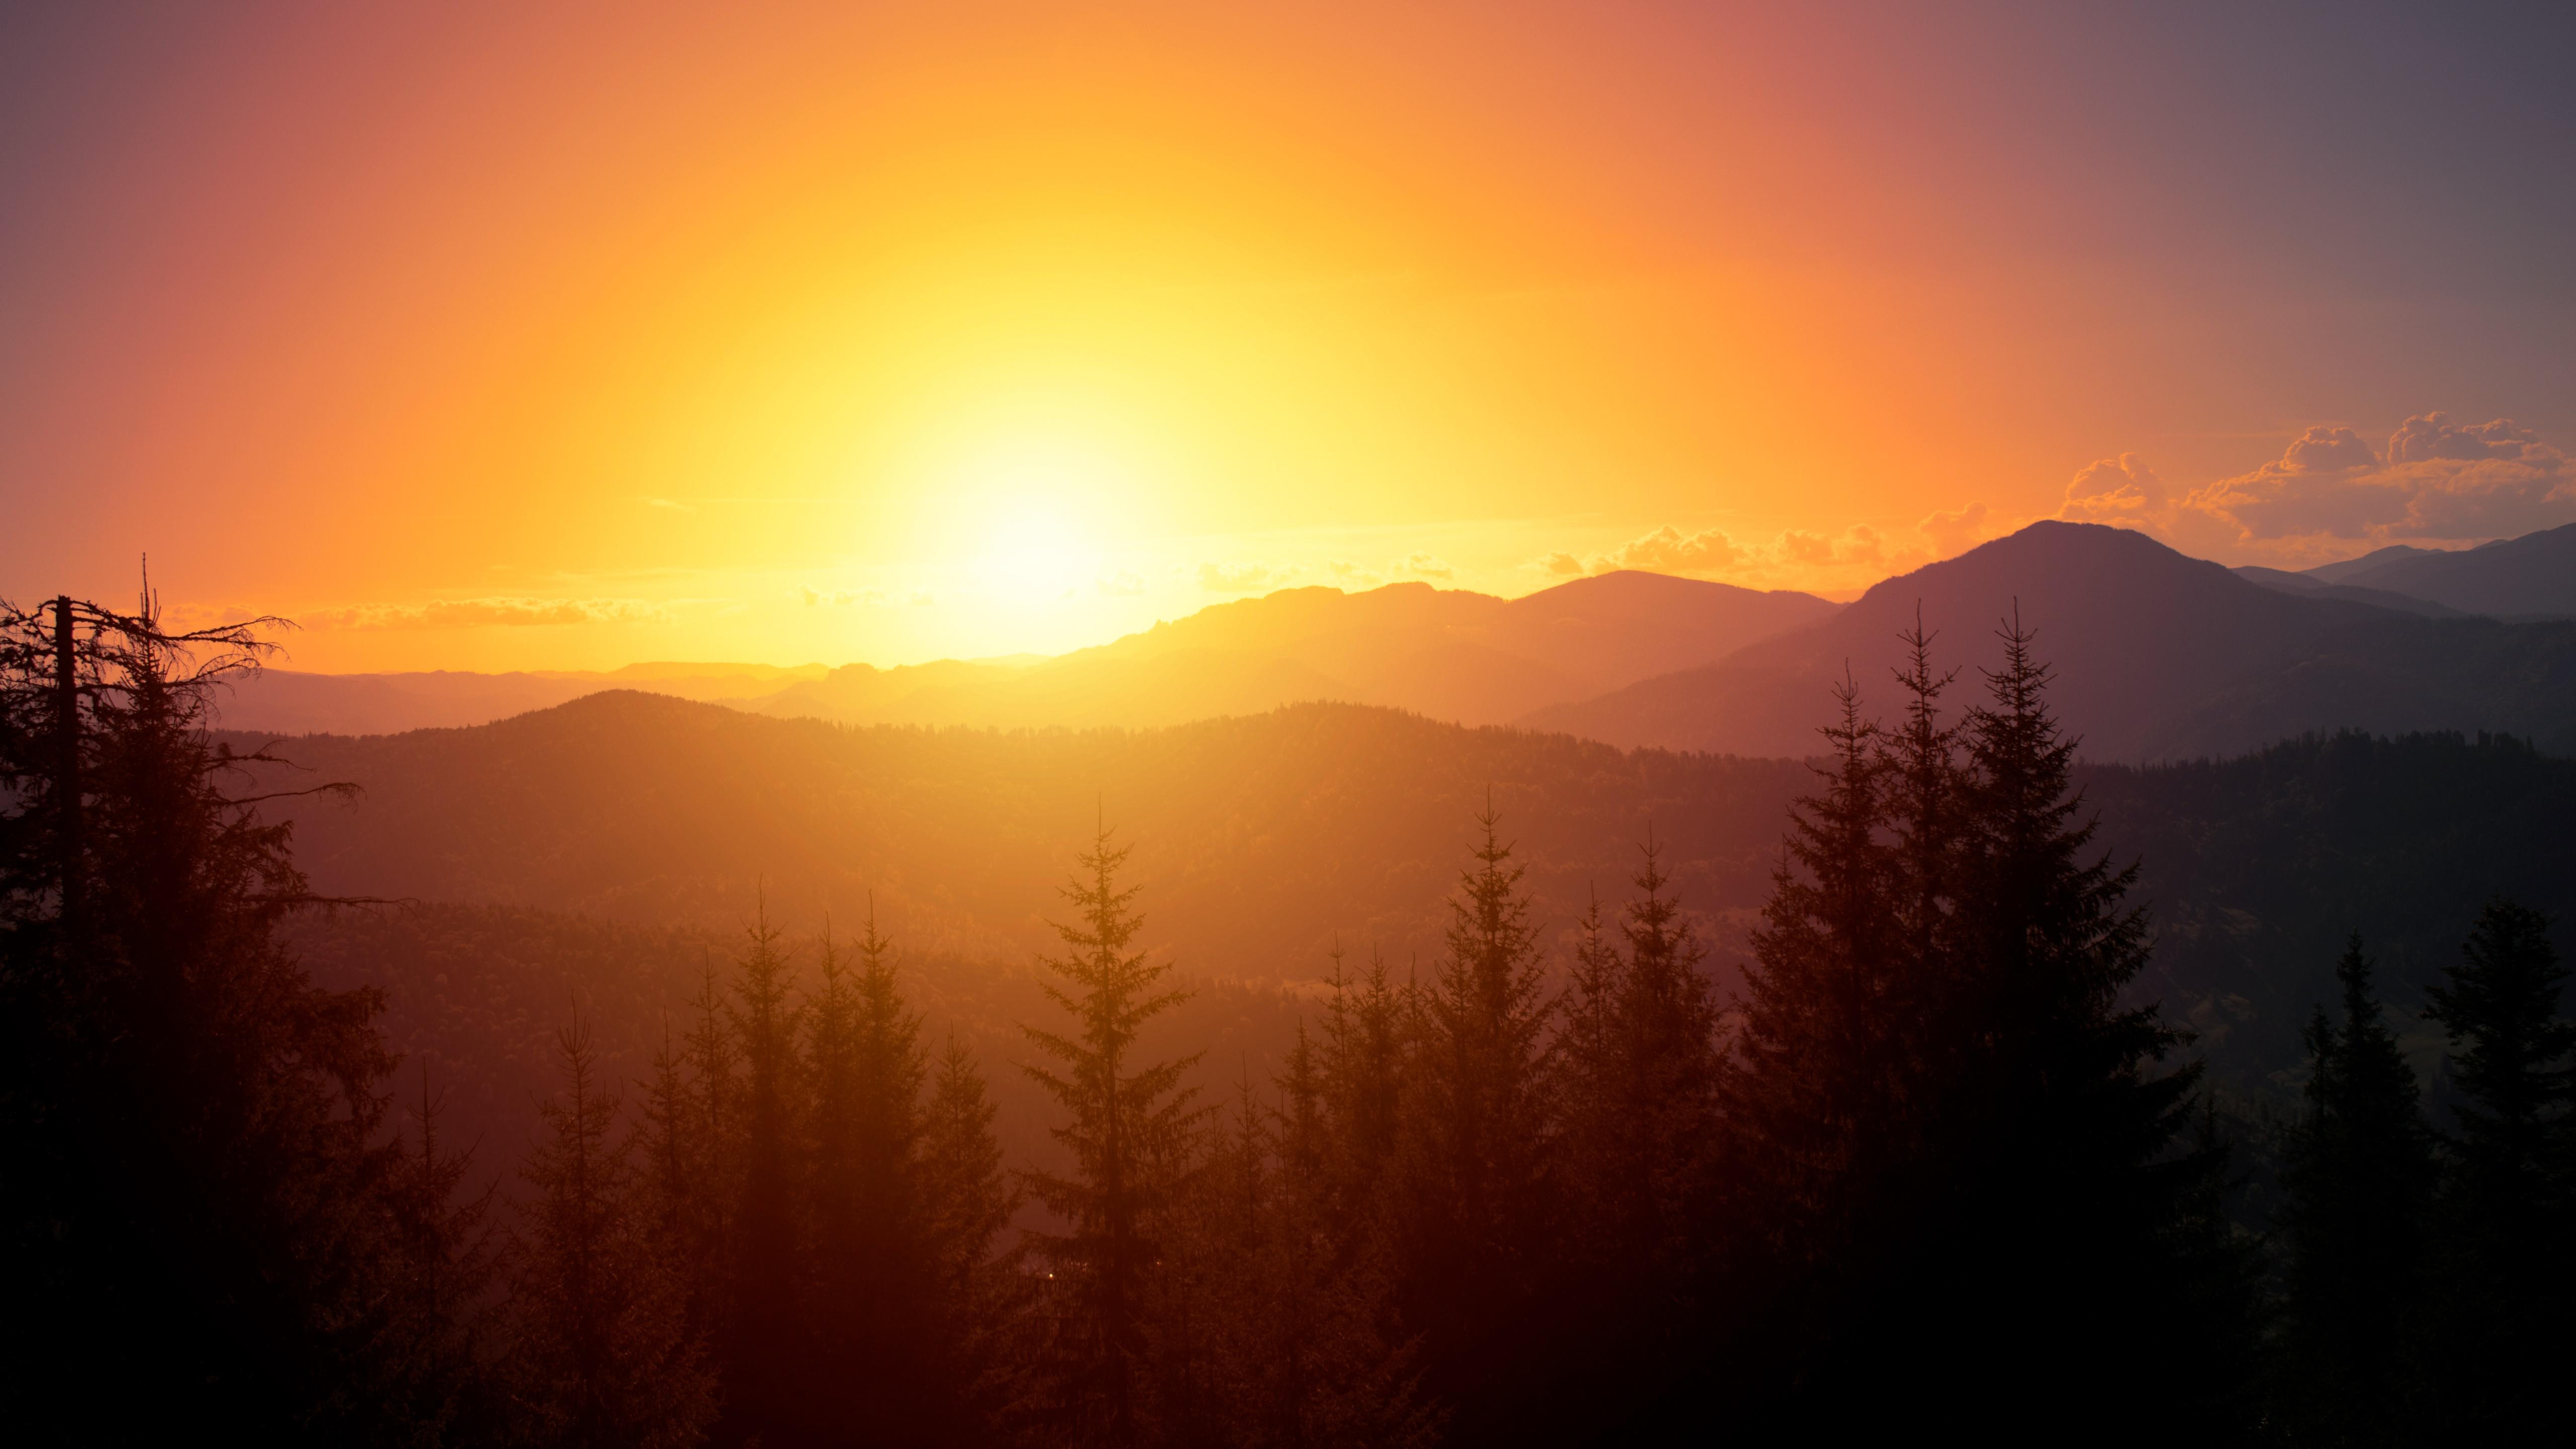 Mountain Sunrise Wallpaper - Red Sky At Morning - 5120x2880 Wallpaper -  